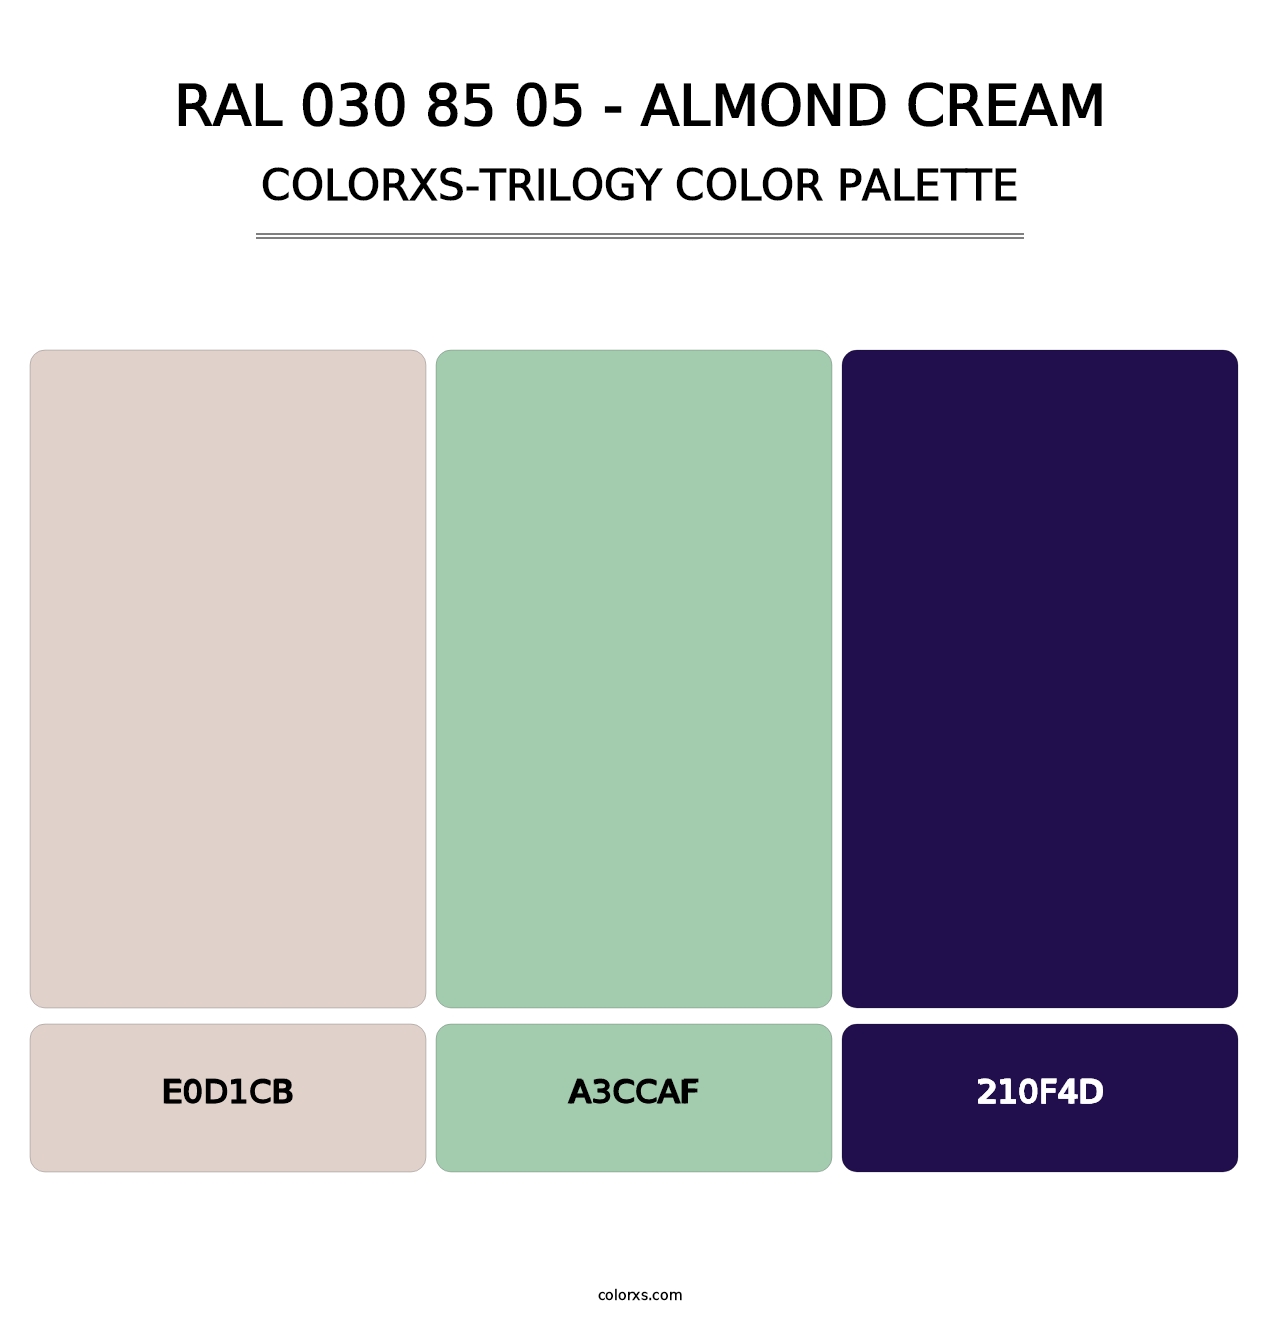 RAL 030 85 05 - Almond Cream - Colorxs Trilogy Palette